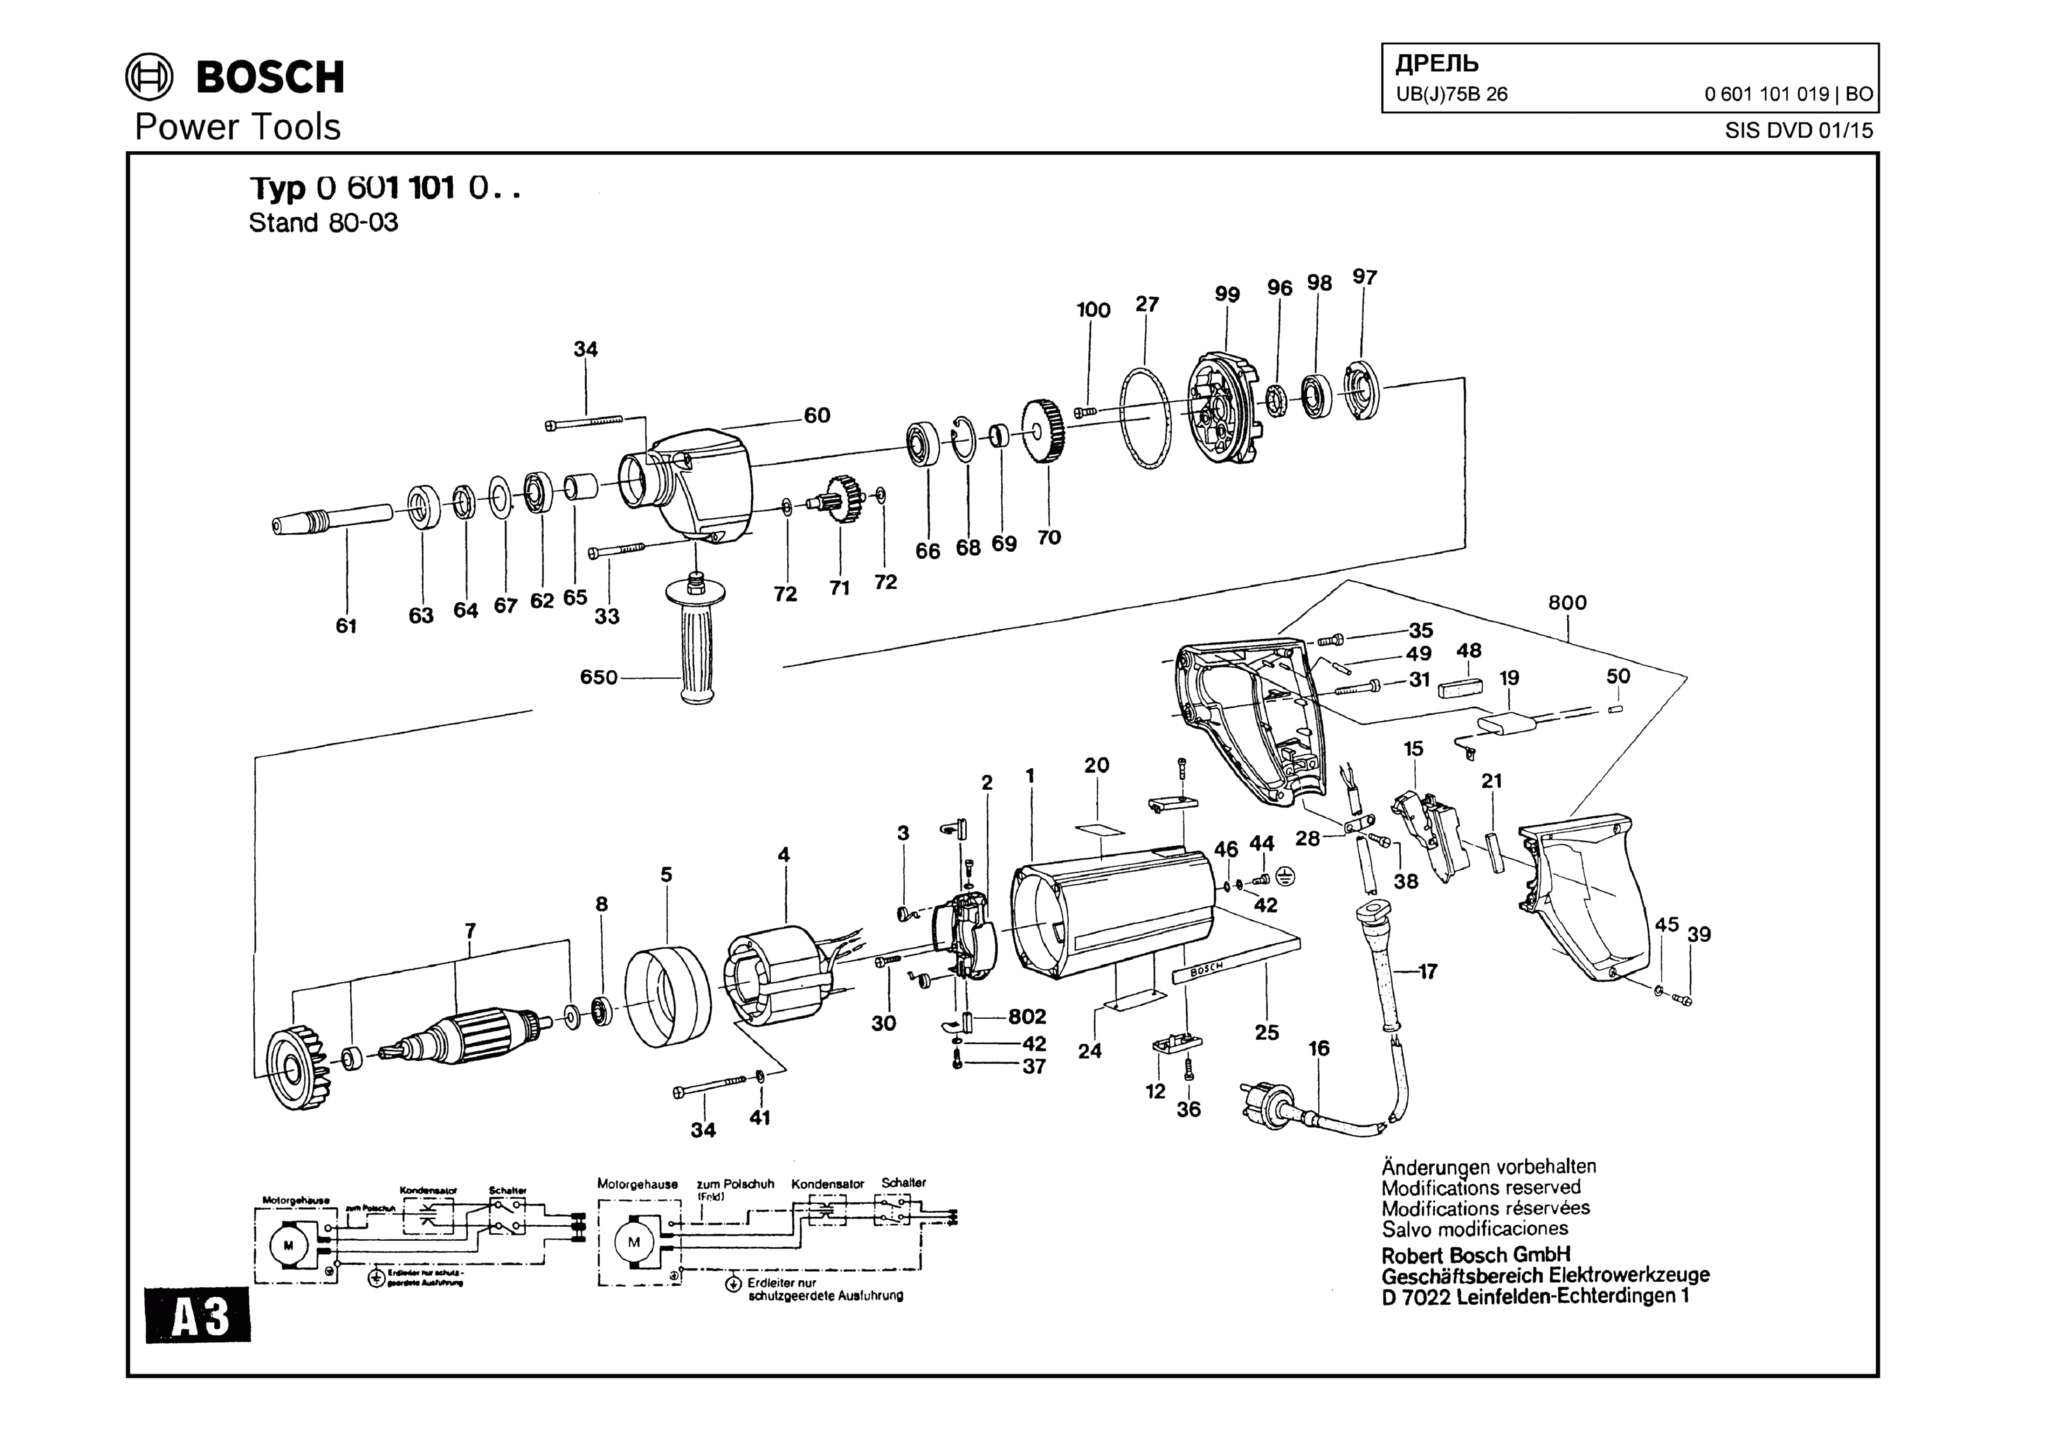 Запчасти, схема и деталировка Bosch UB(J)75B 26 (ТИП 0601101019)